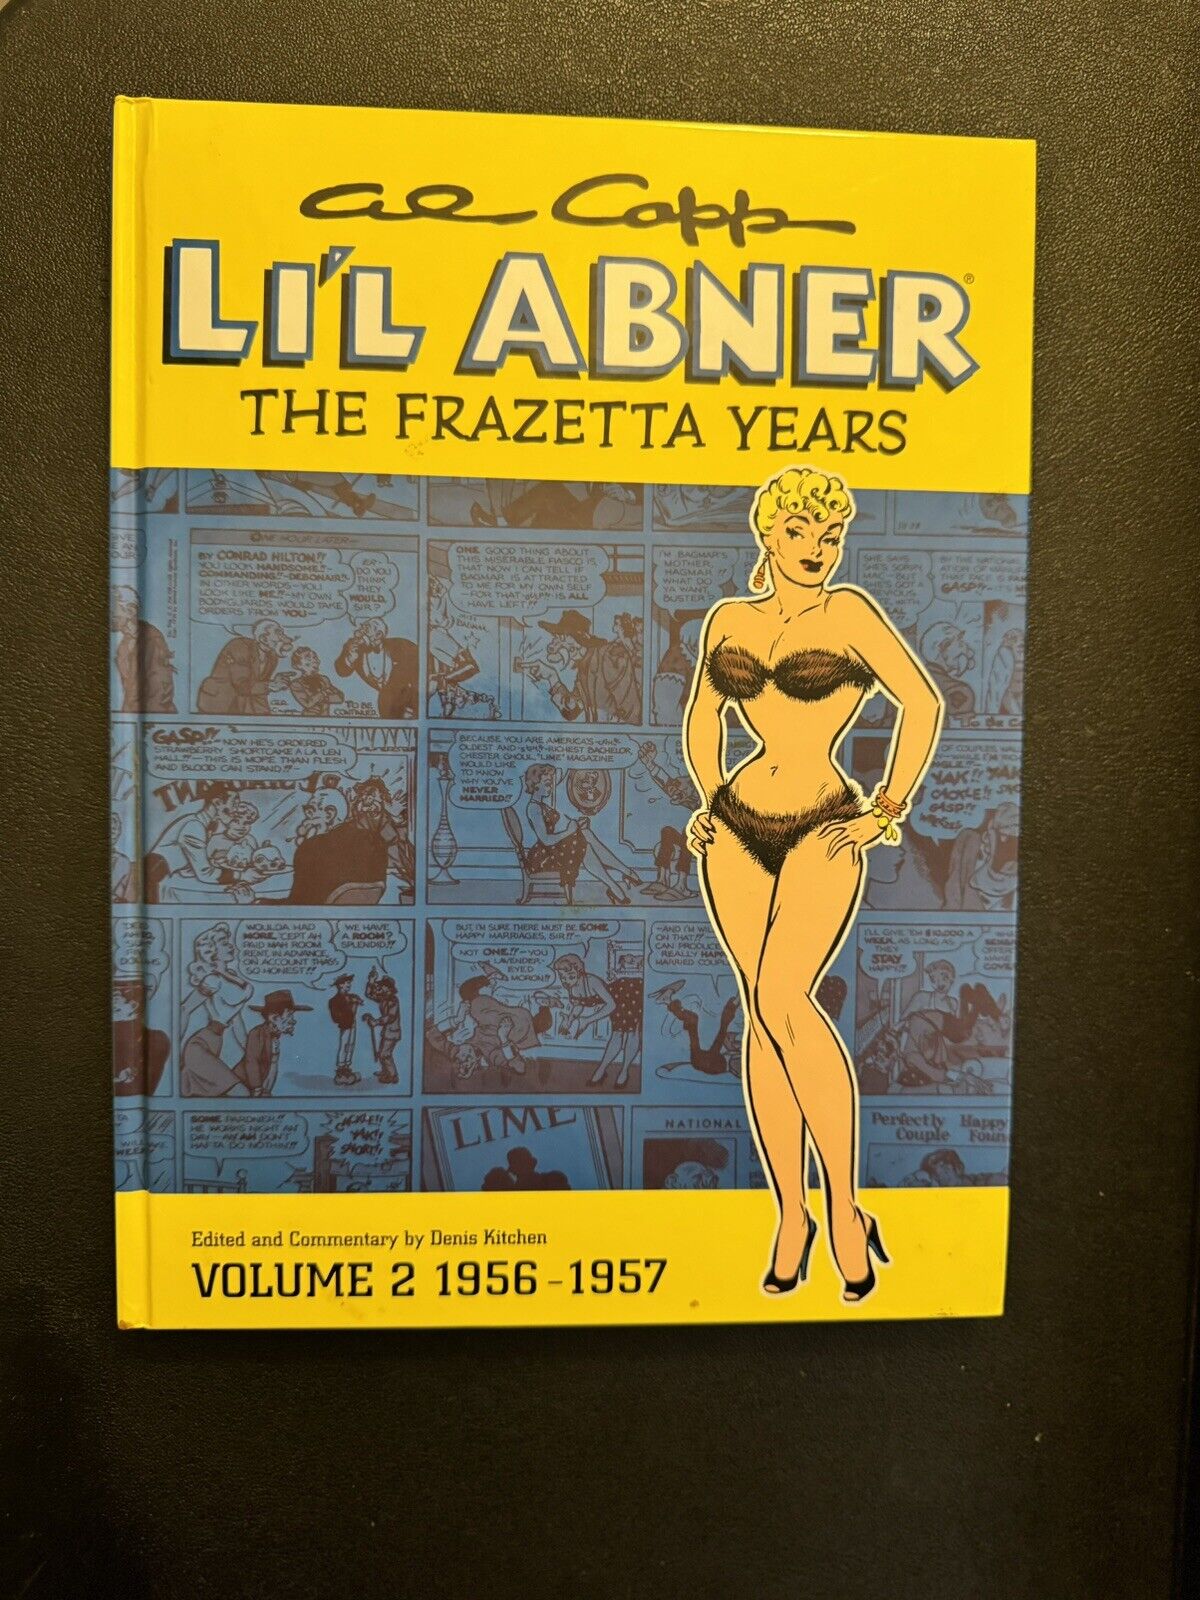 Al Capp's Li'l Abner: the Frazetta Years #2 (Dark Horse Comics October 2003)